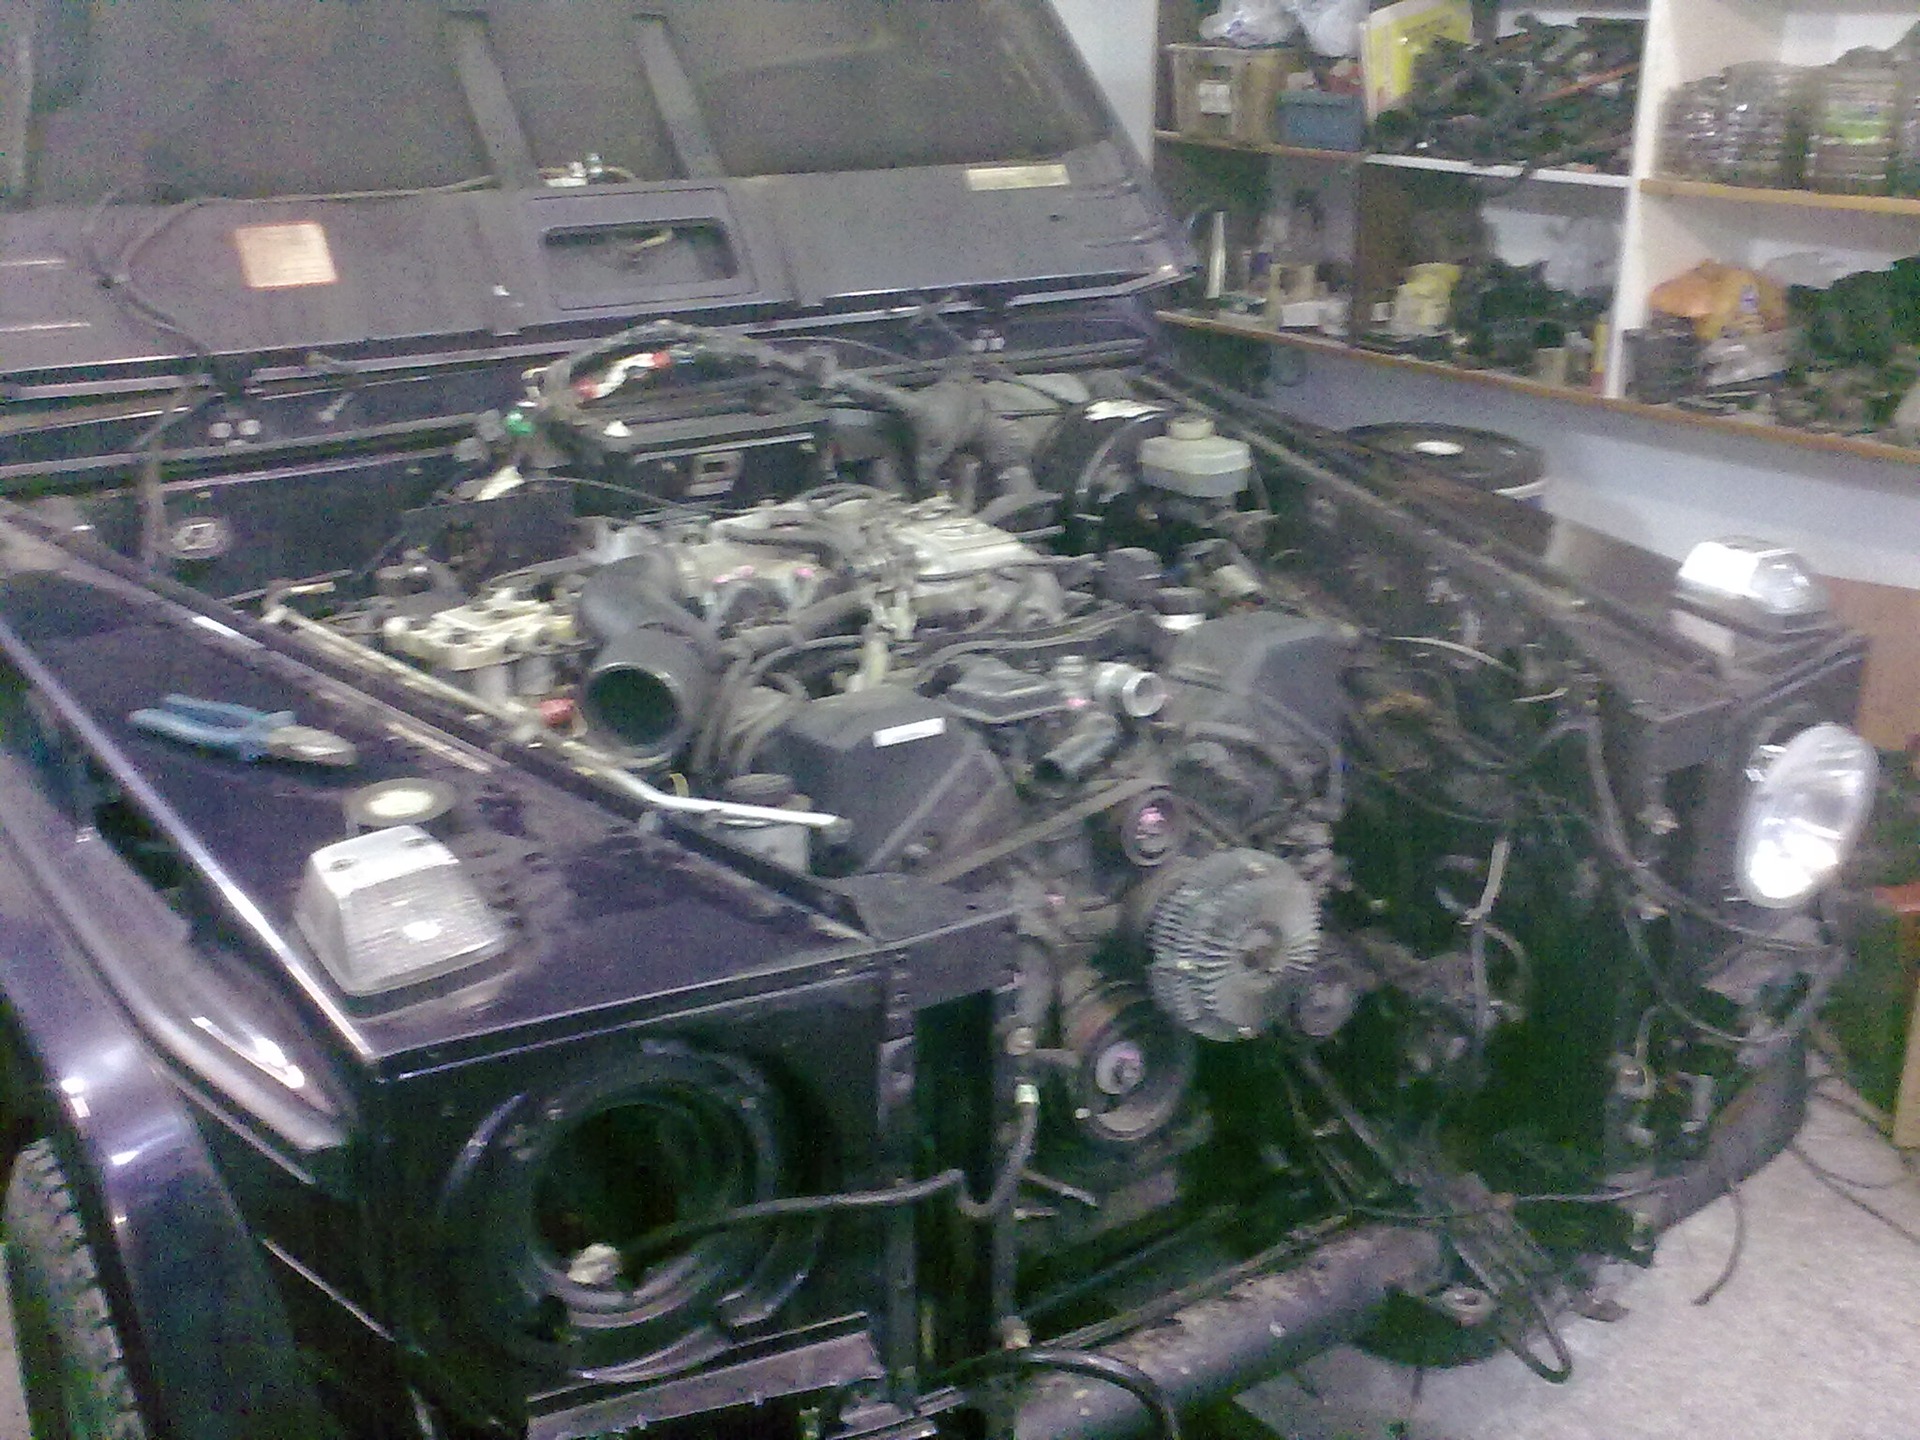 Мотор гелендваген. W463 3uz Fe. Мотор от Гелика 1995г. Mercedes-Benz g-class свап двигателя. Мотор мотор Гелика.